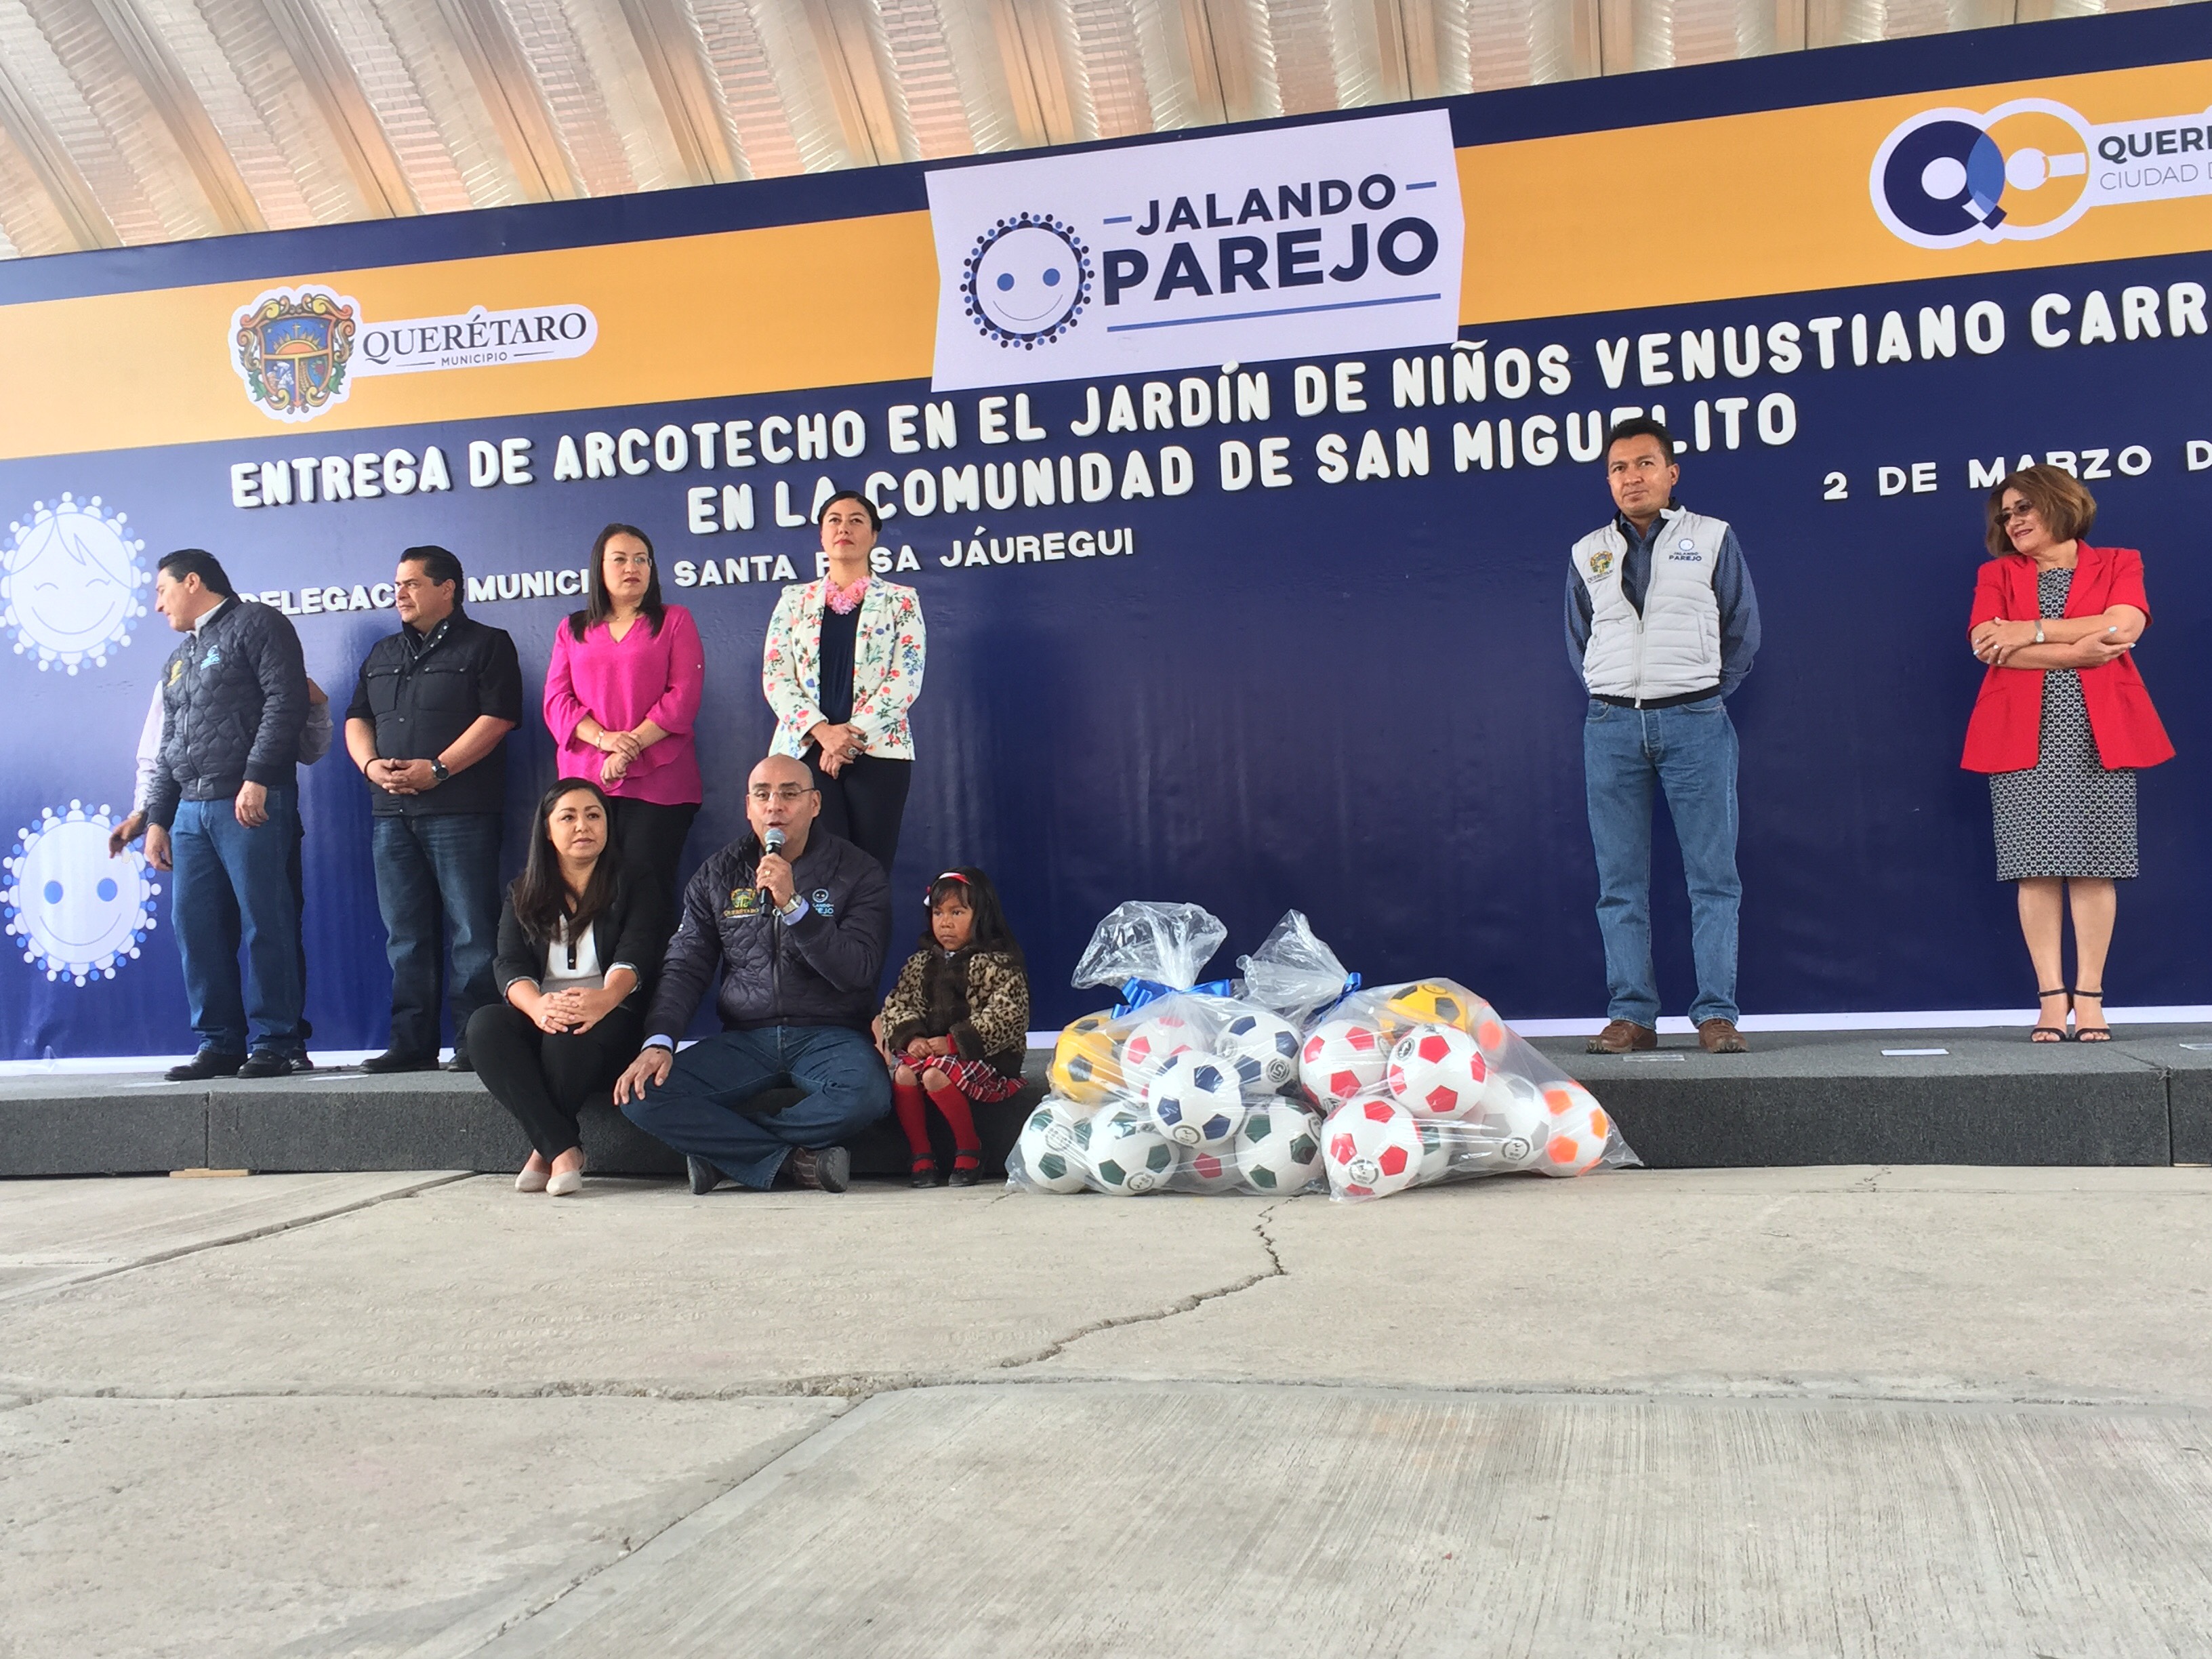  Municipio de Querétaro entrega arcotecho en jardín de niños de Santa Rosa Jáuregui